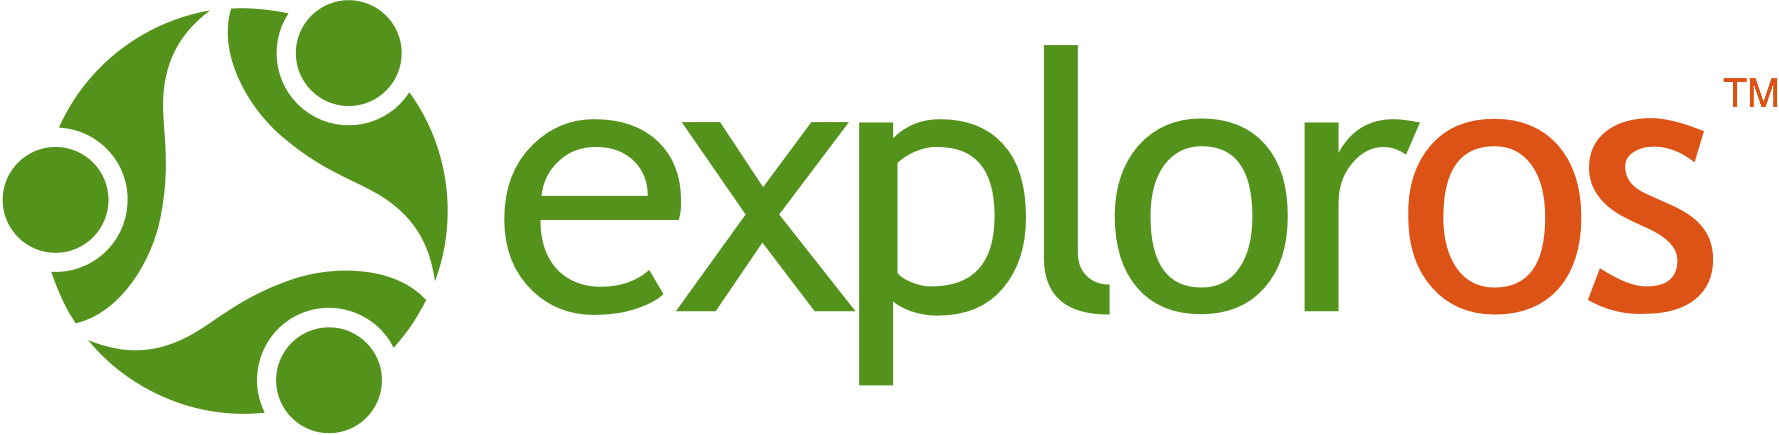 exploros Logo